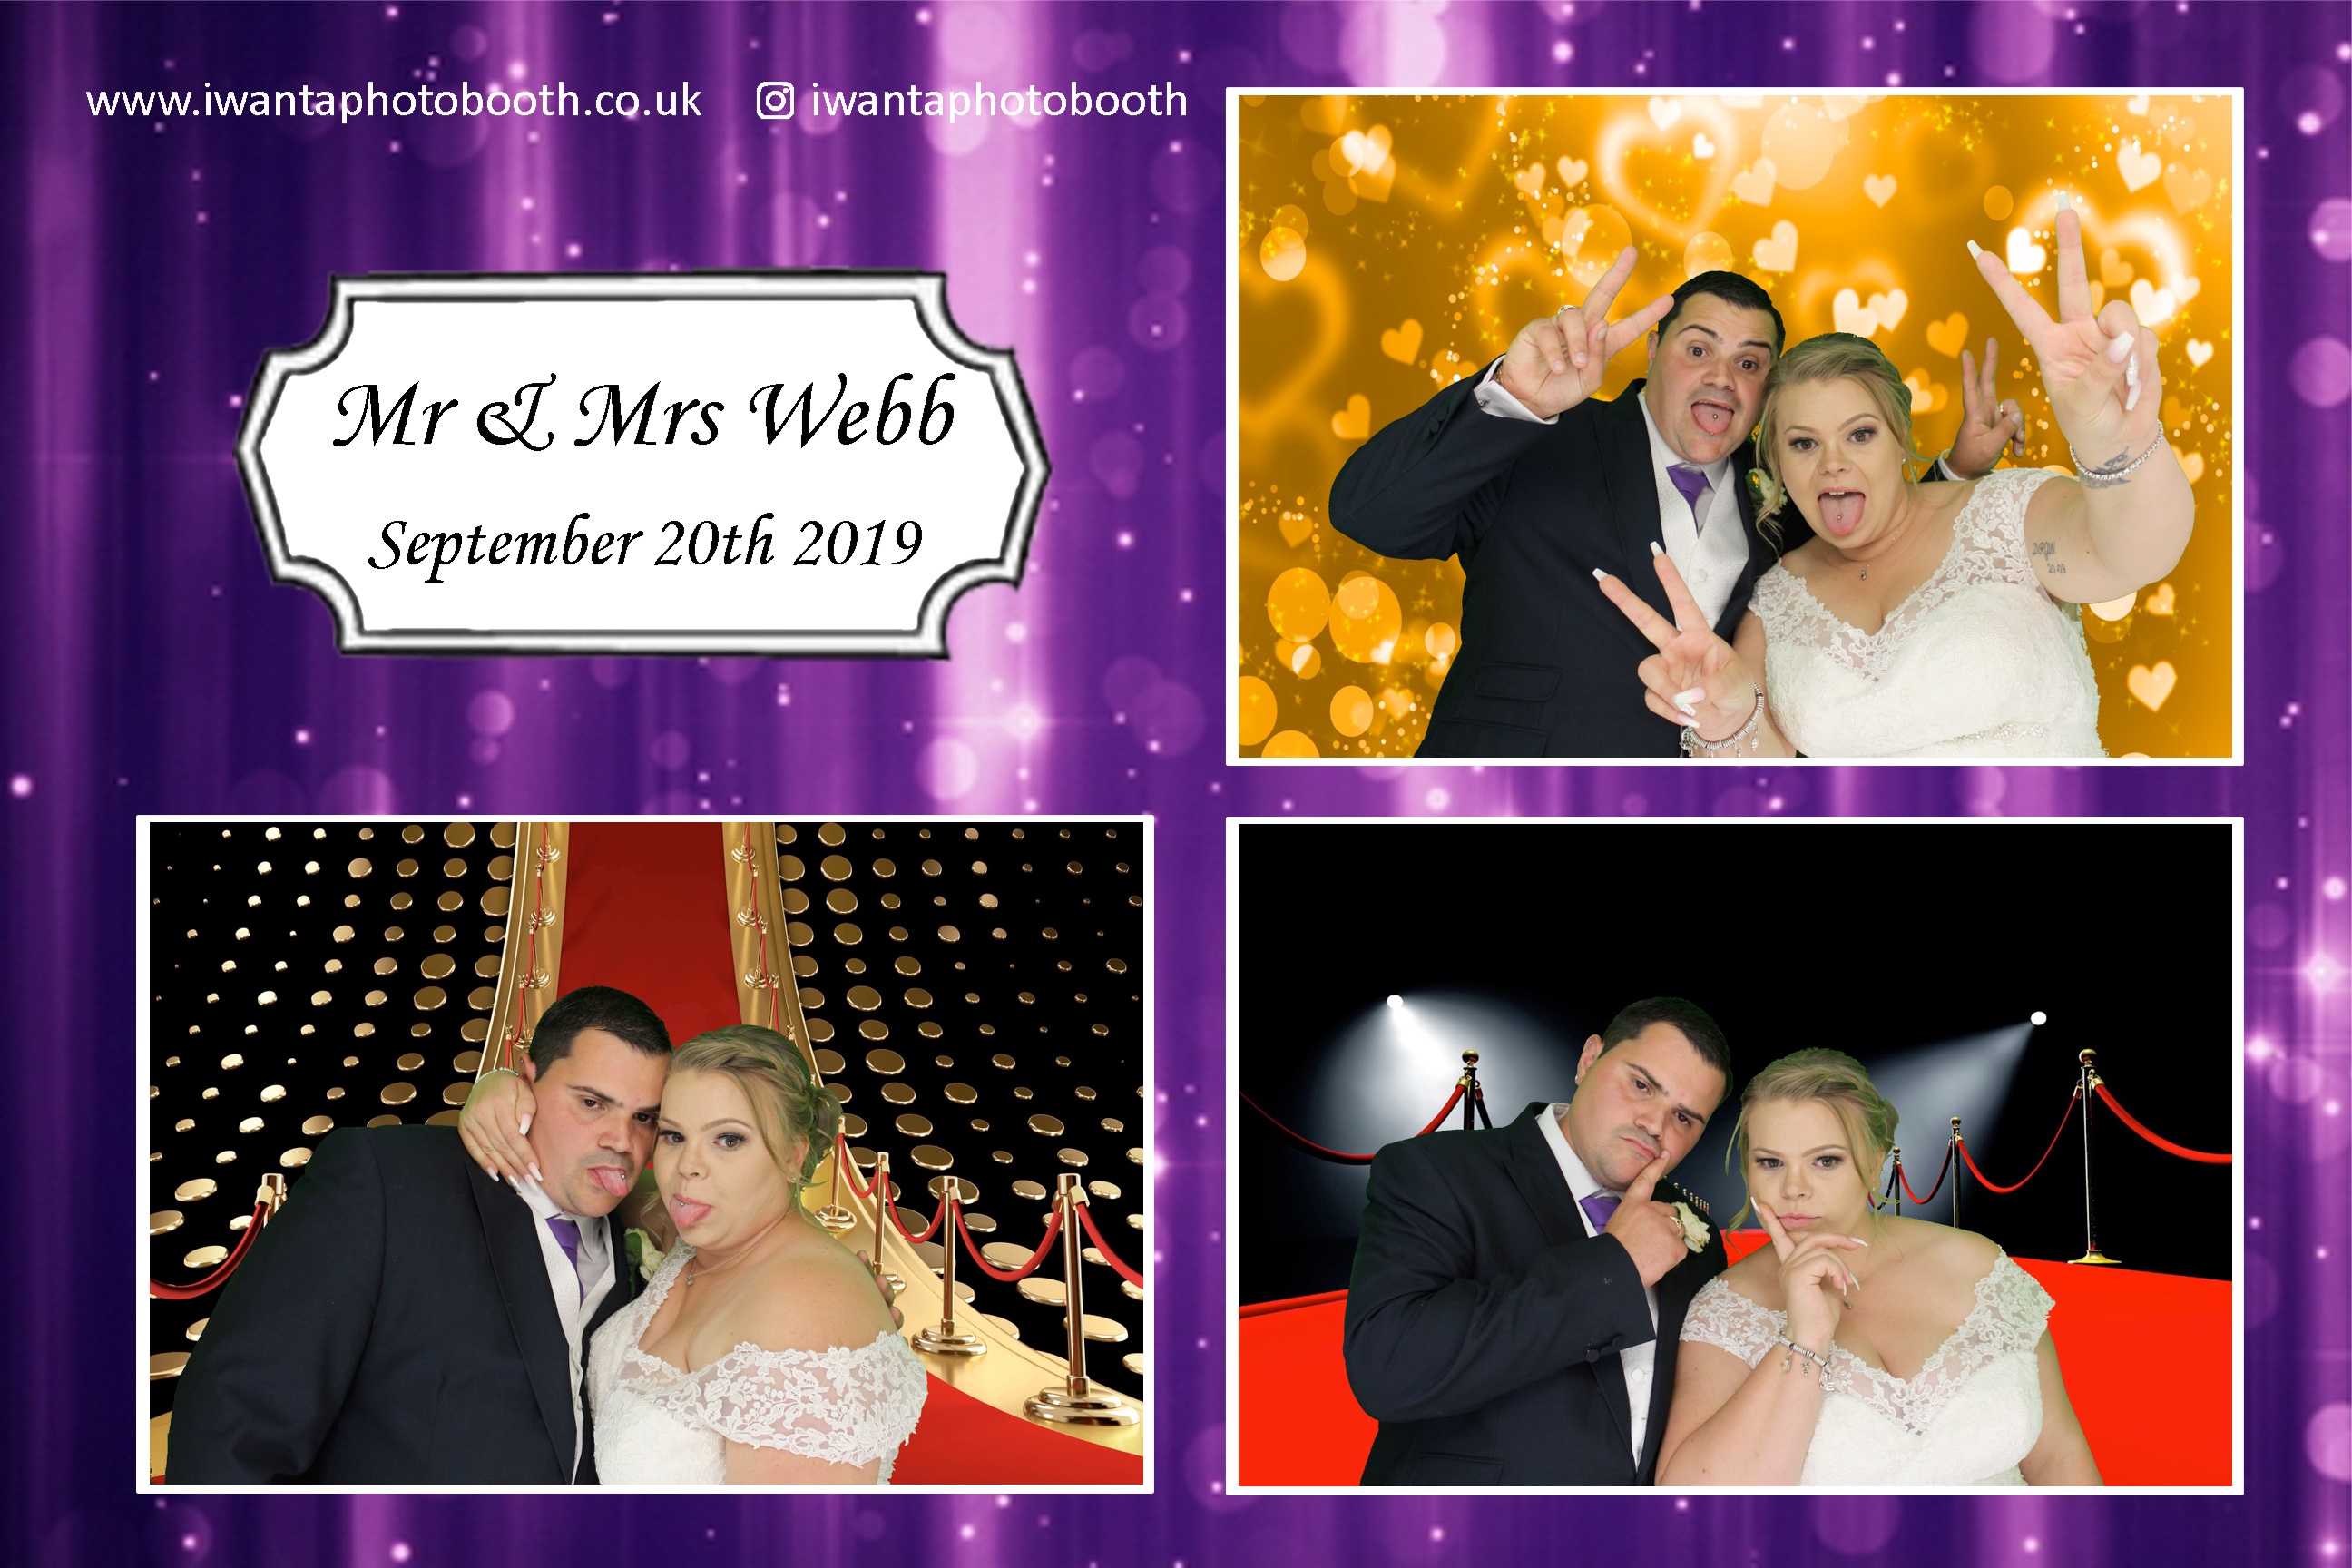 Mr & Mrs Webb's Wedding - I Want A Photo Booth